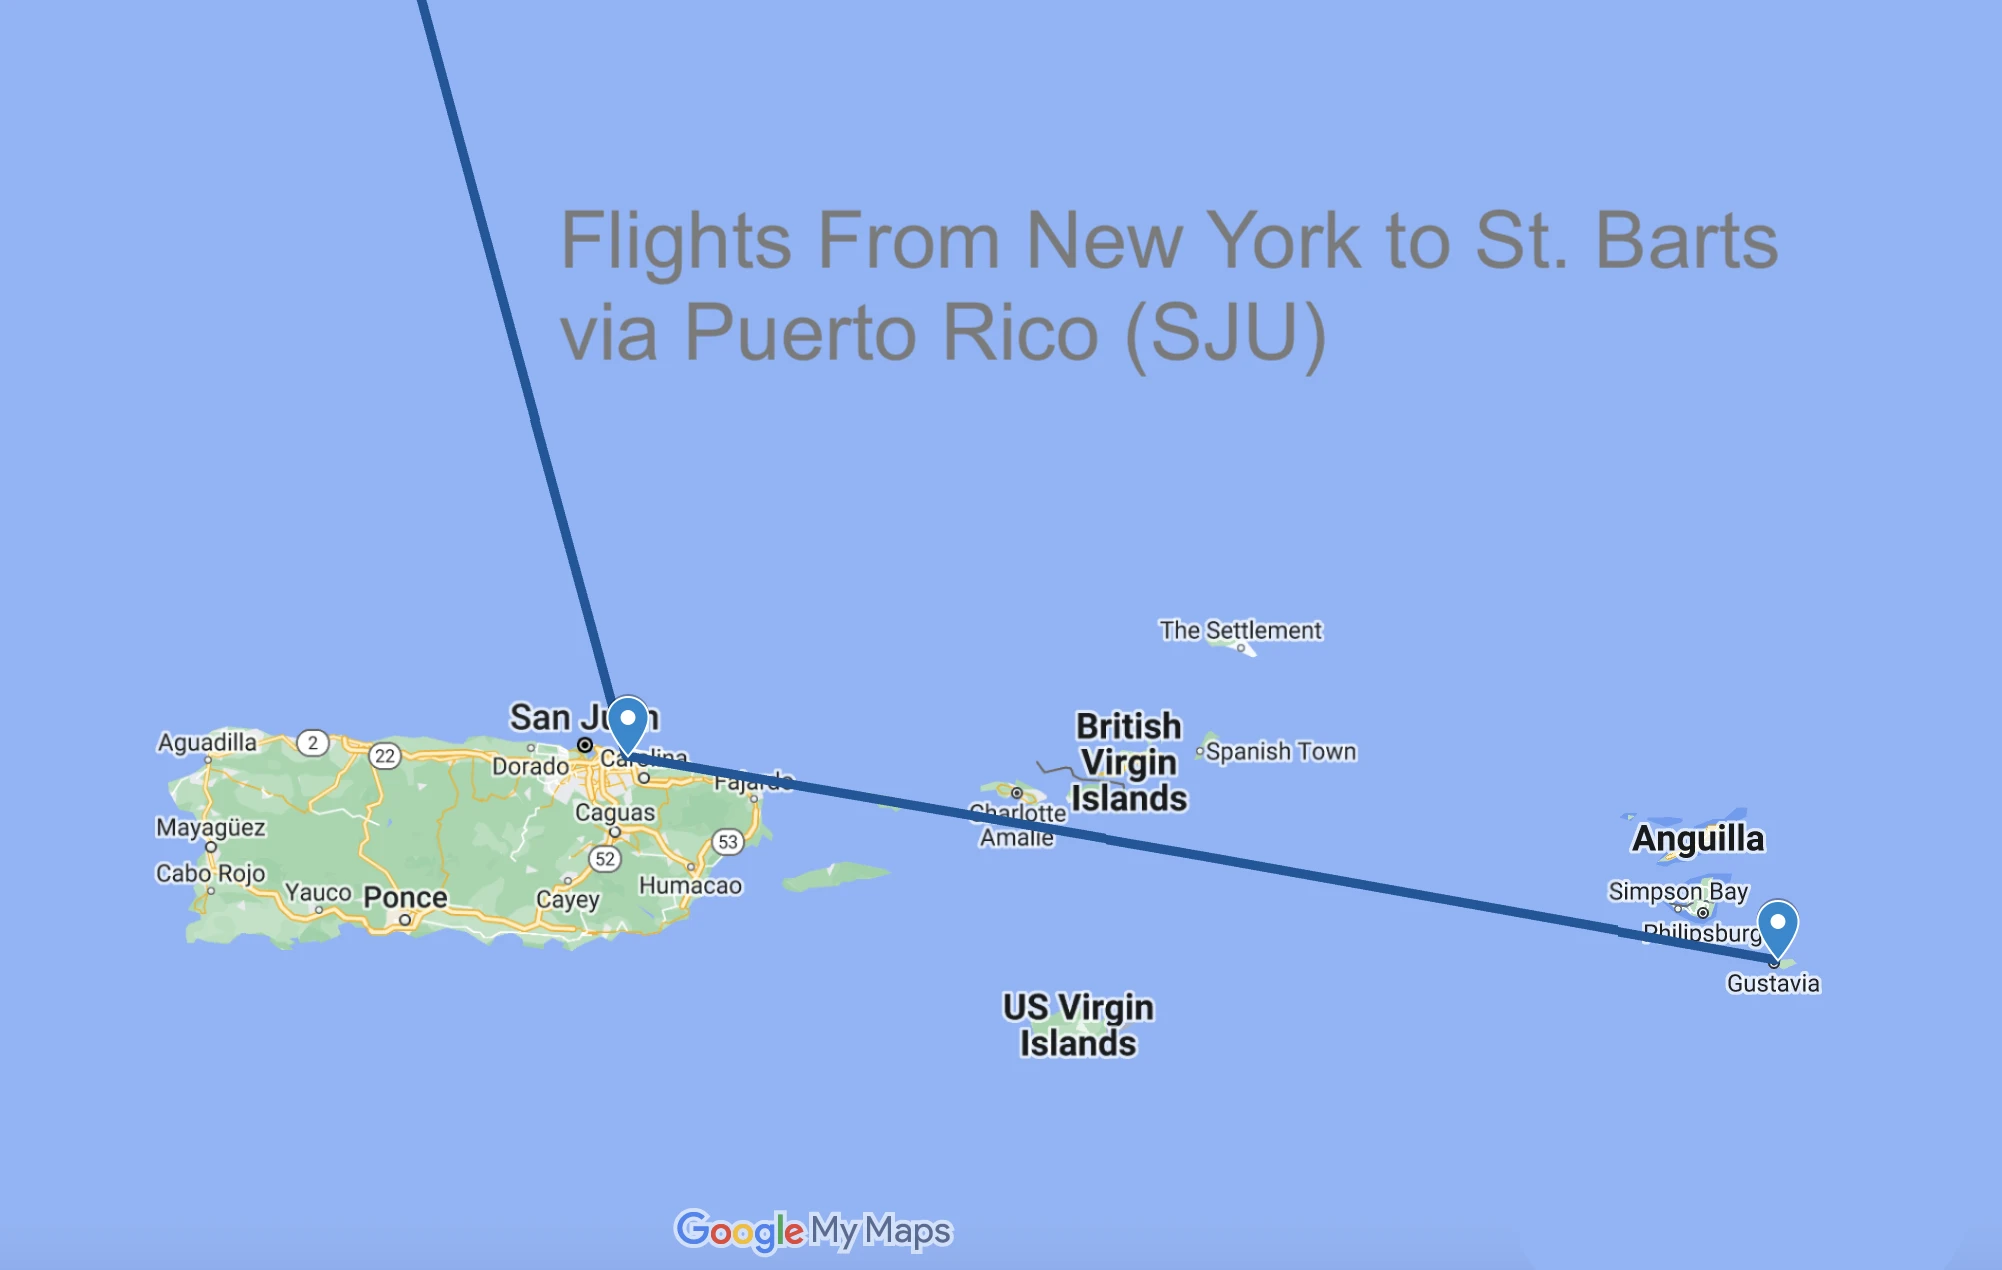 Flights From New York to St. Barts via Puerto Rico (SJU)